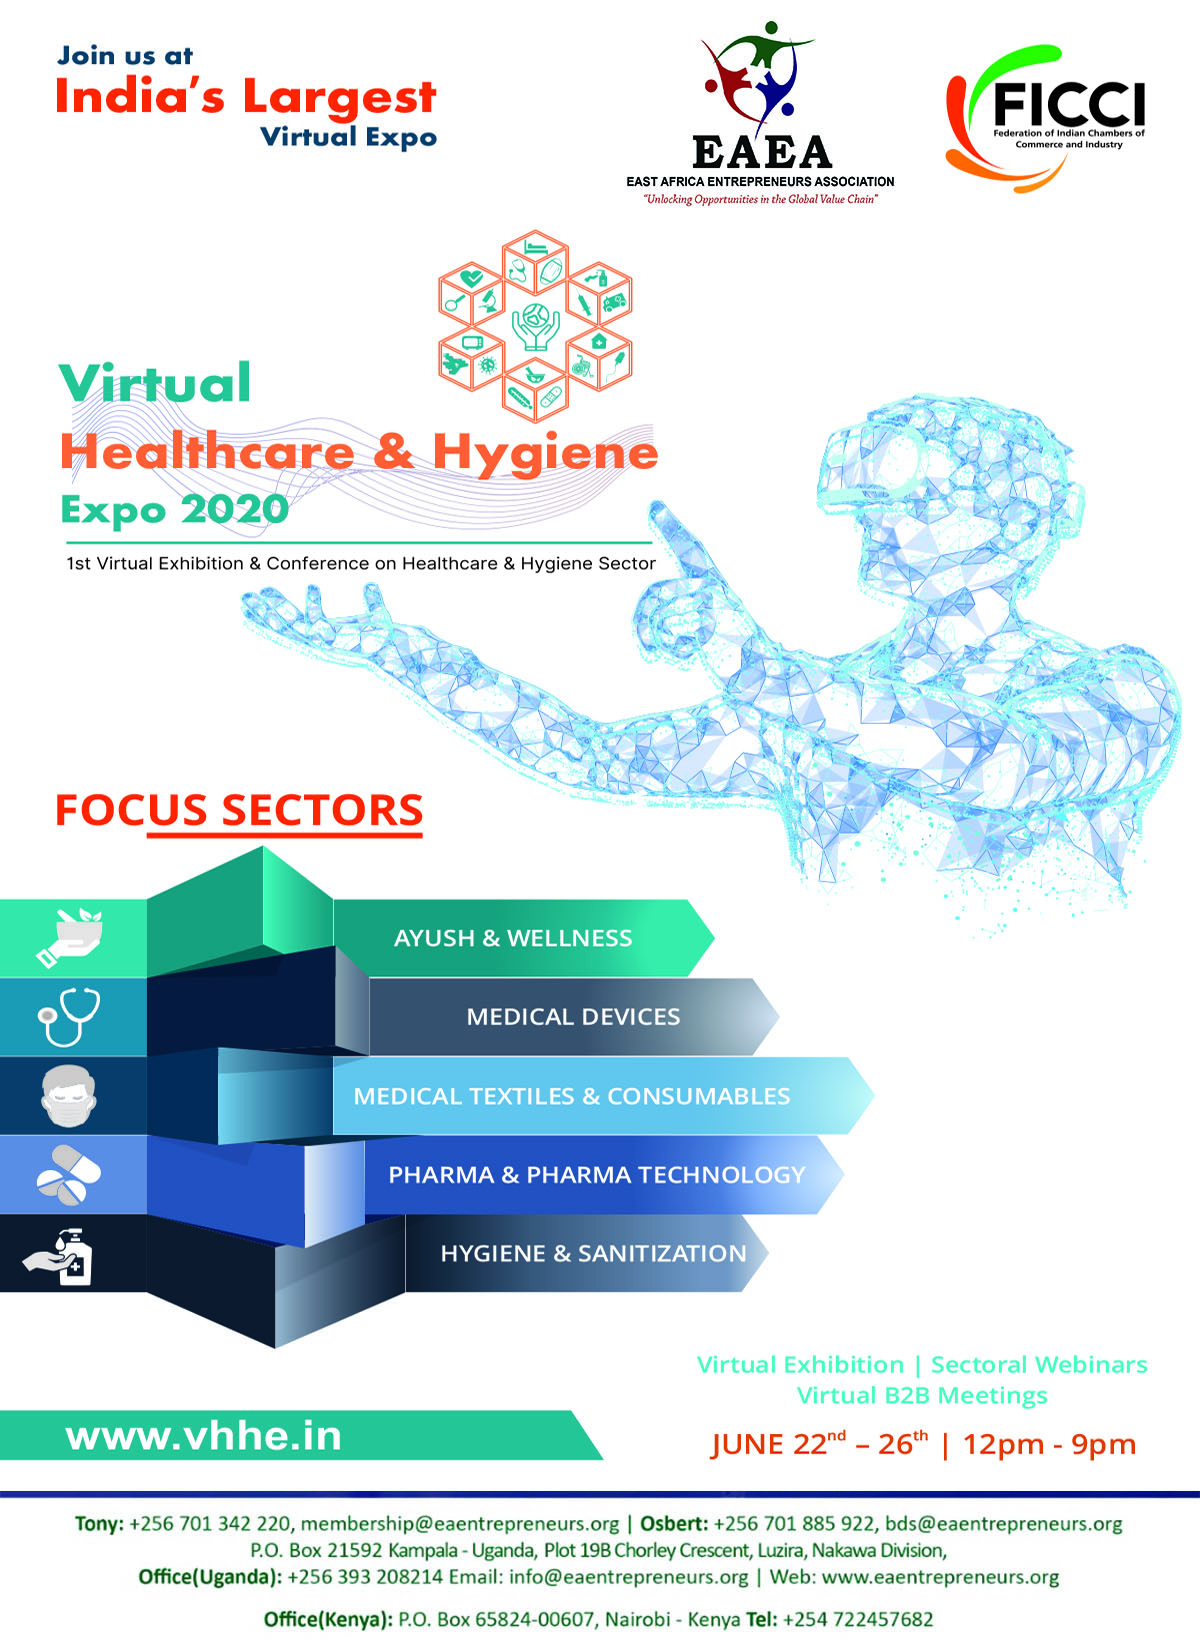 Virtual expo on Healthcare & Hygiene, June 22-26, 2020, India